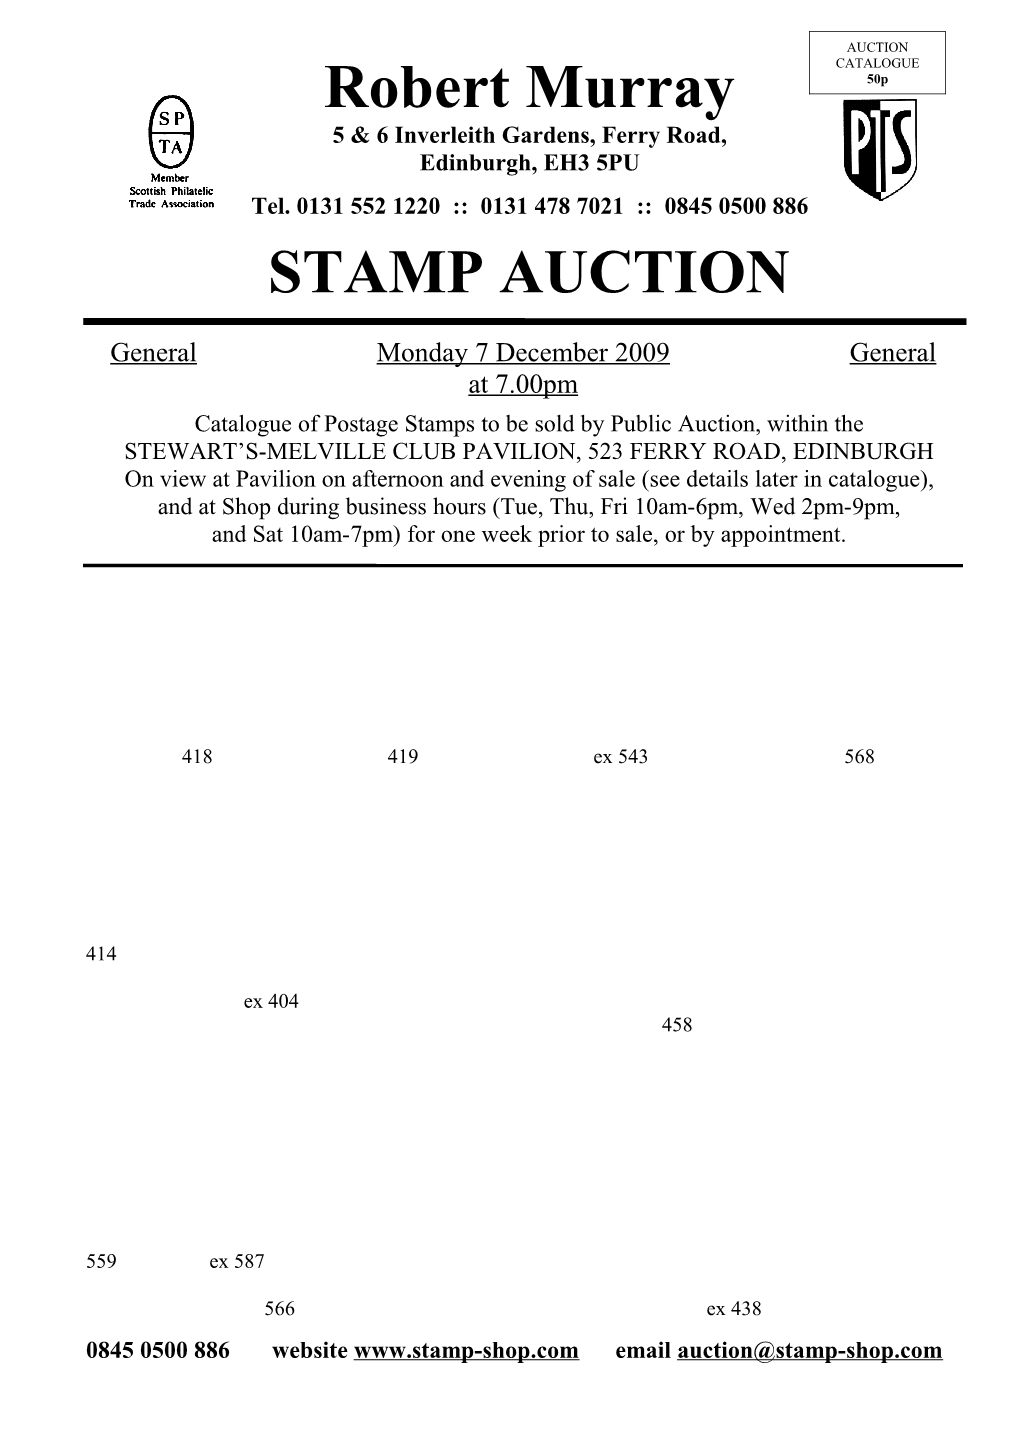 Robert Murray Stamp Auction s1